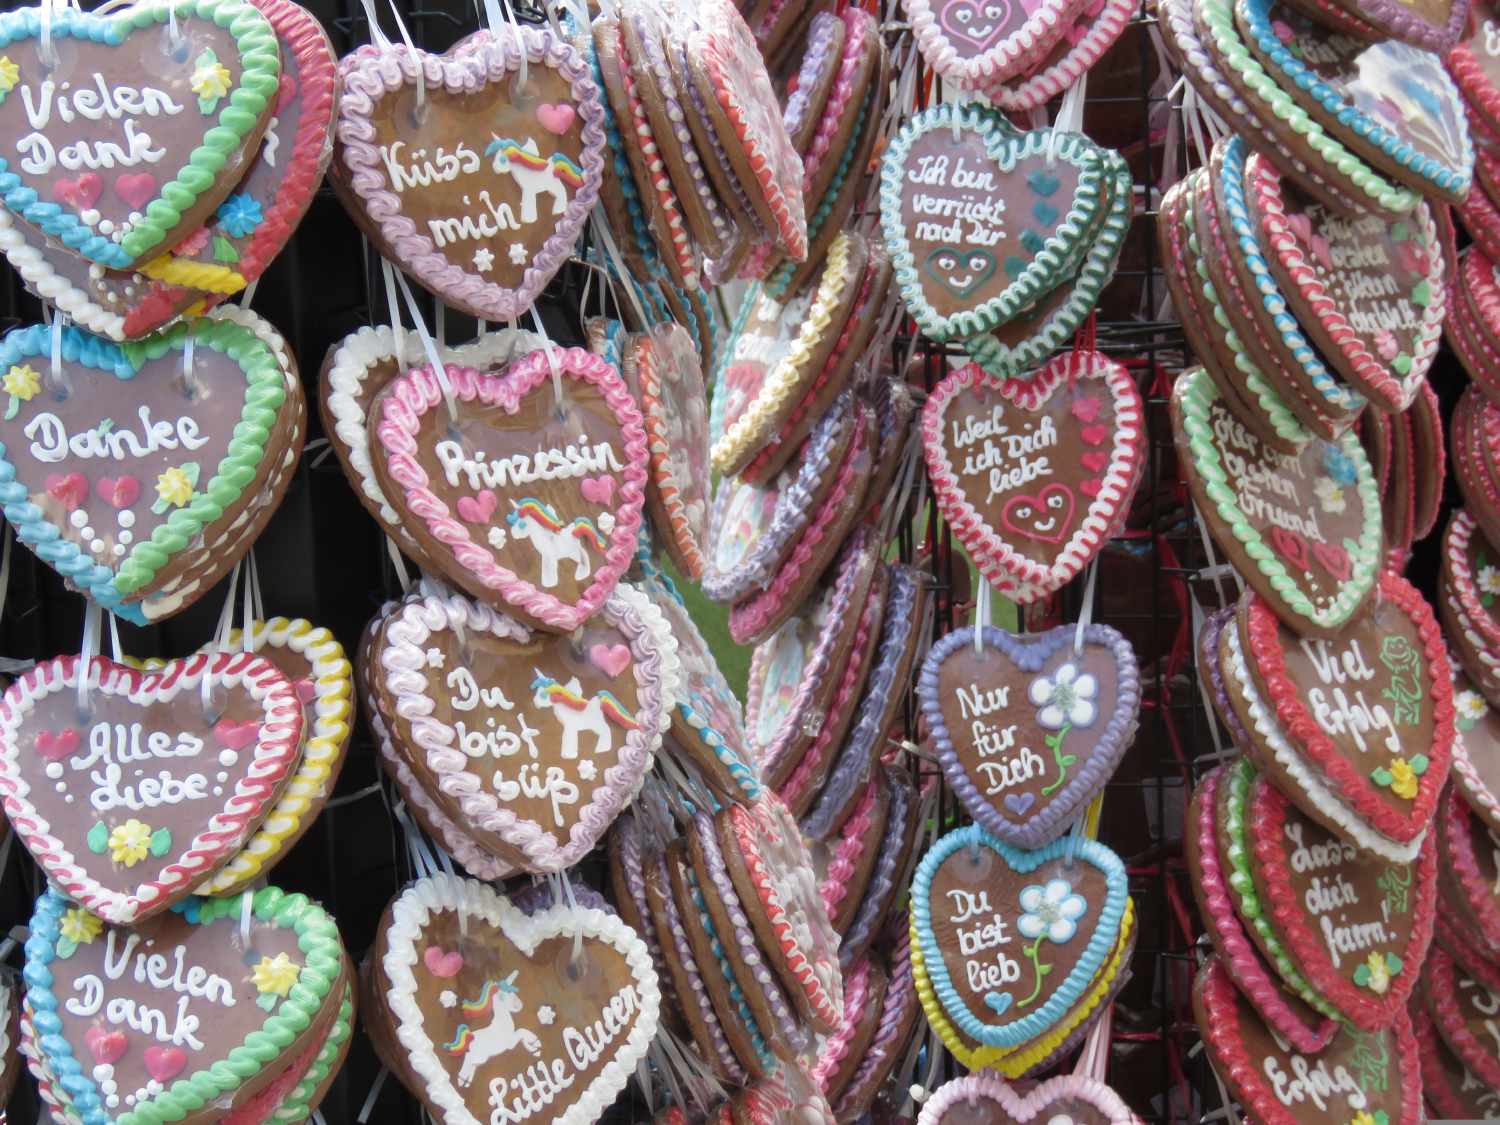 Traditional German Lebkuchen hearts.